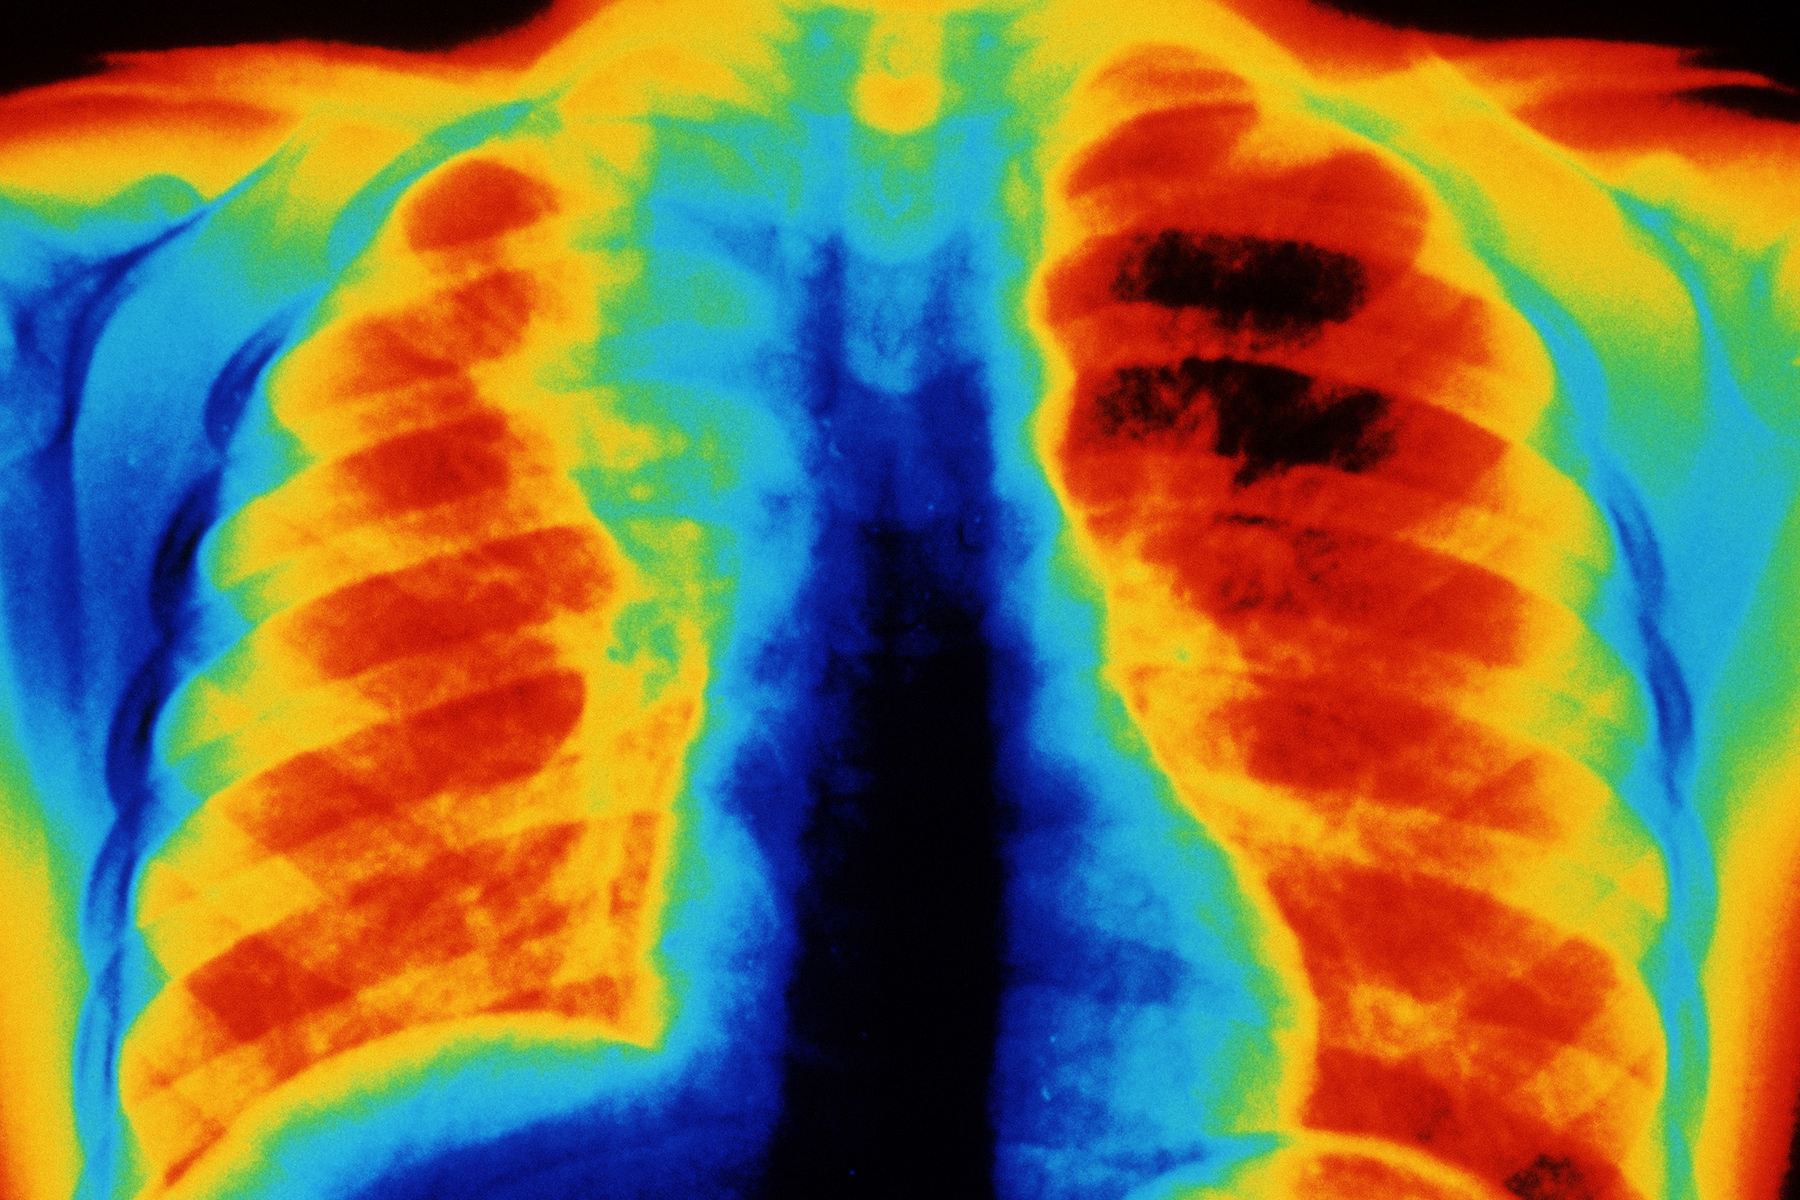 Americans’ Lung Health: The Heart-broken Endure Most